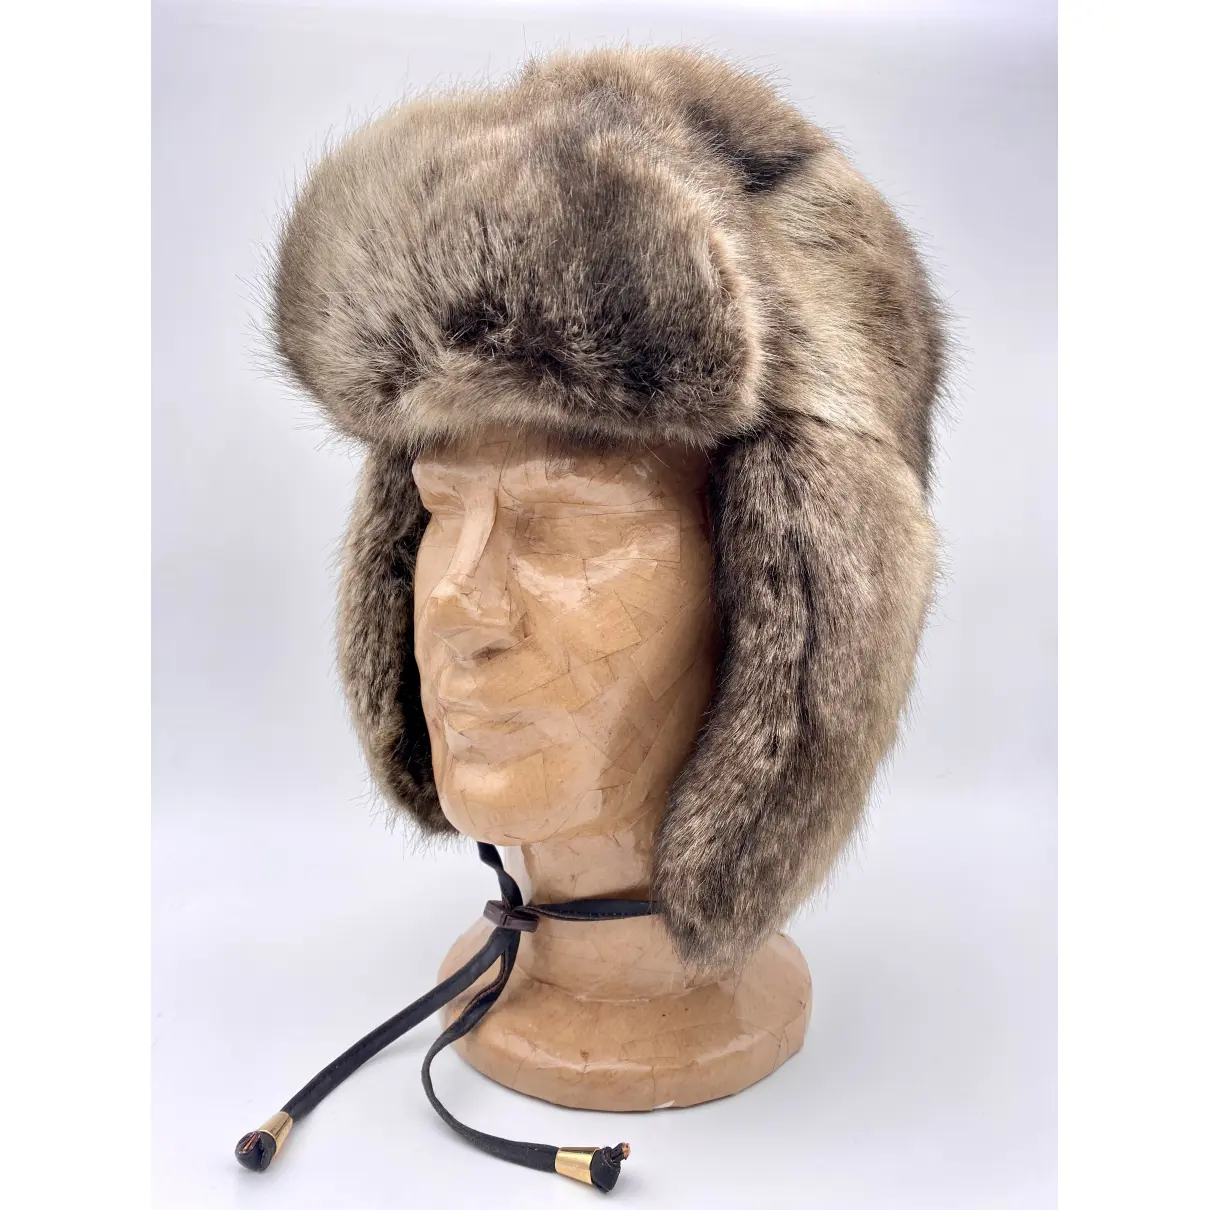 Buy Stetson Faux fur hat online